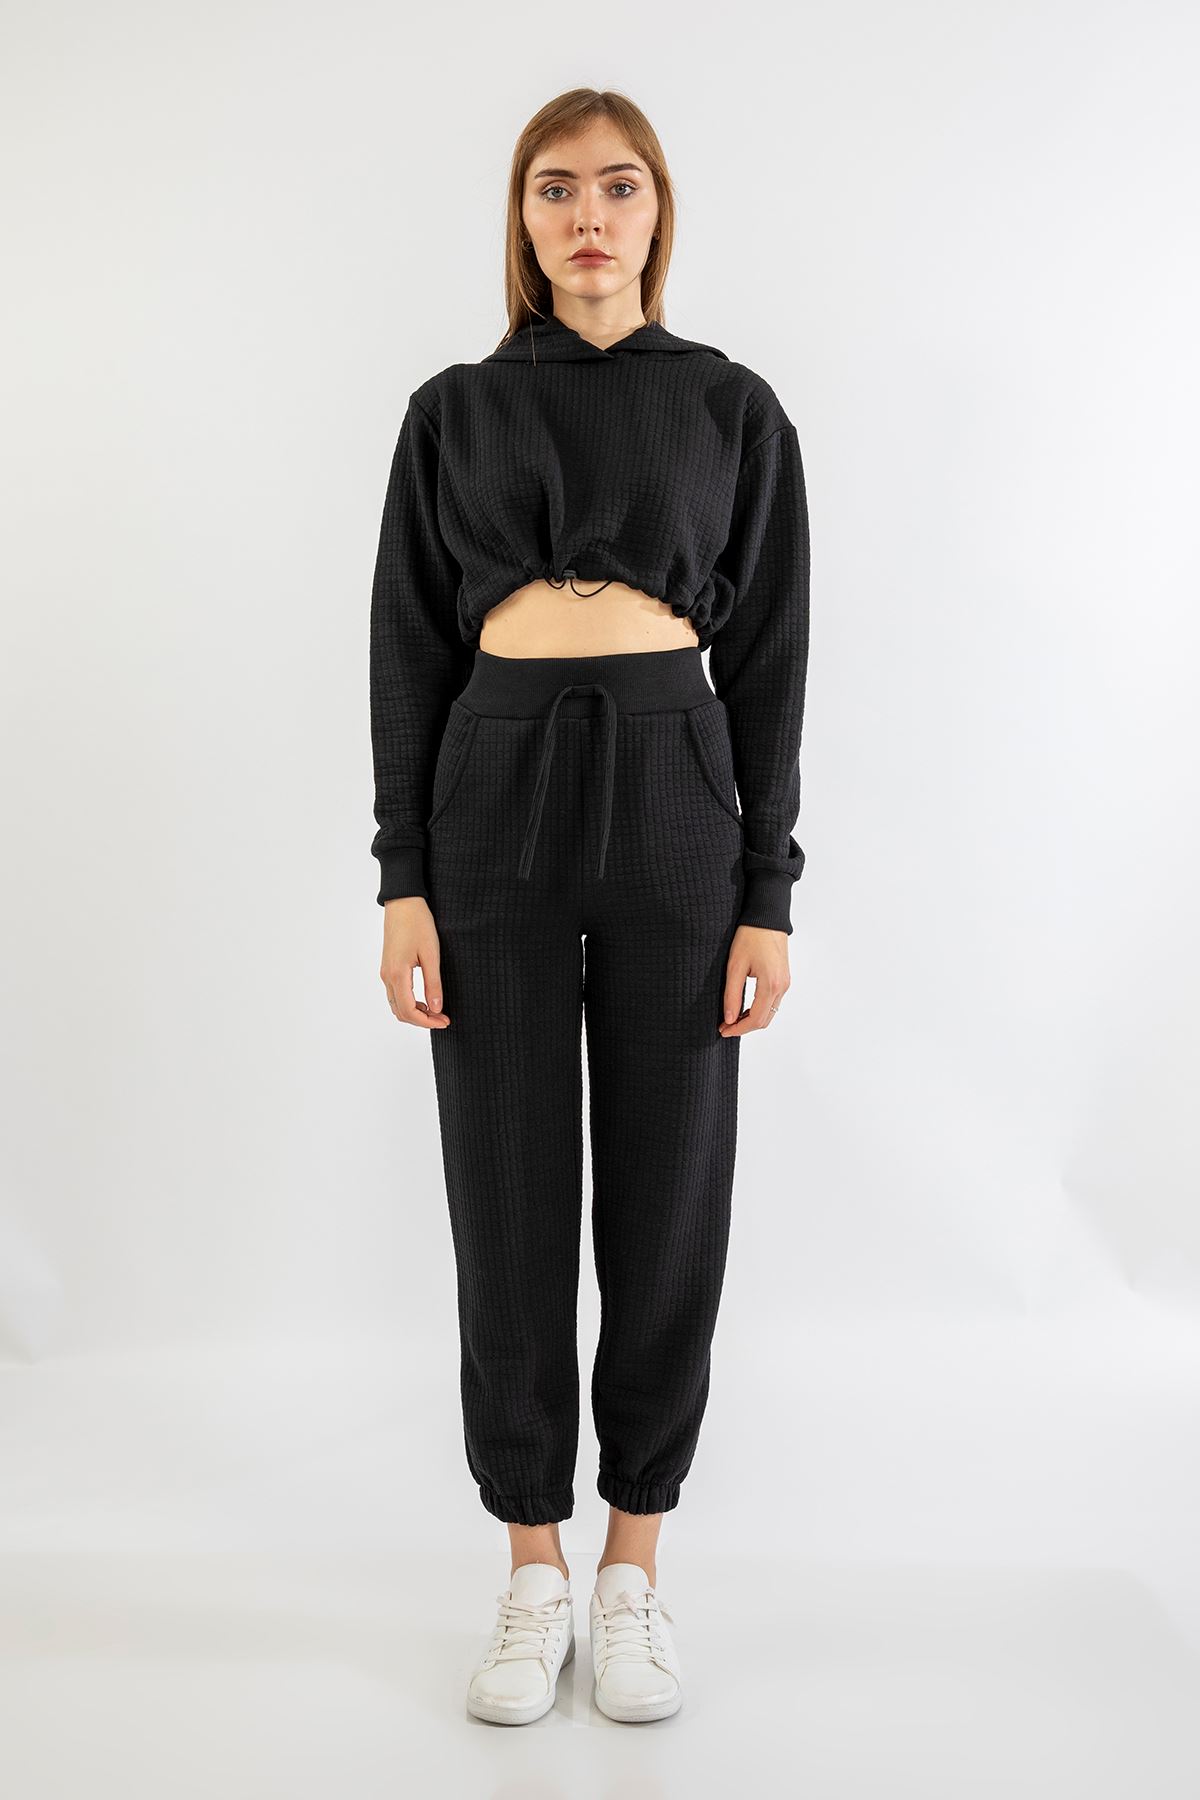 Honeycomb Fabric Long Sleeve Hooded Comfy Women Crop - Black